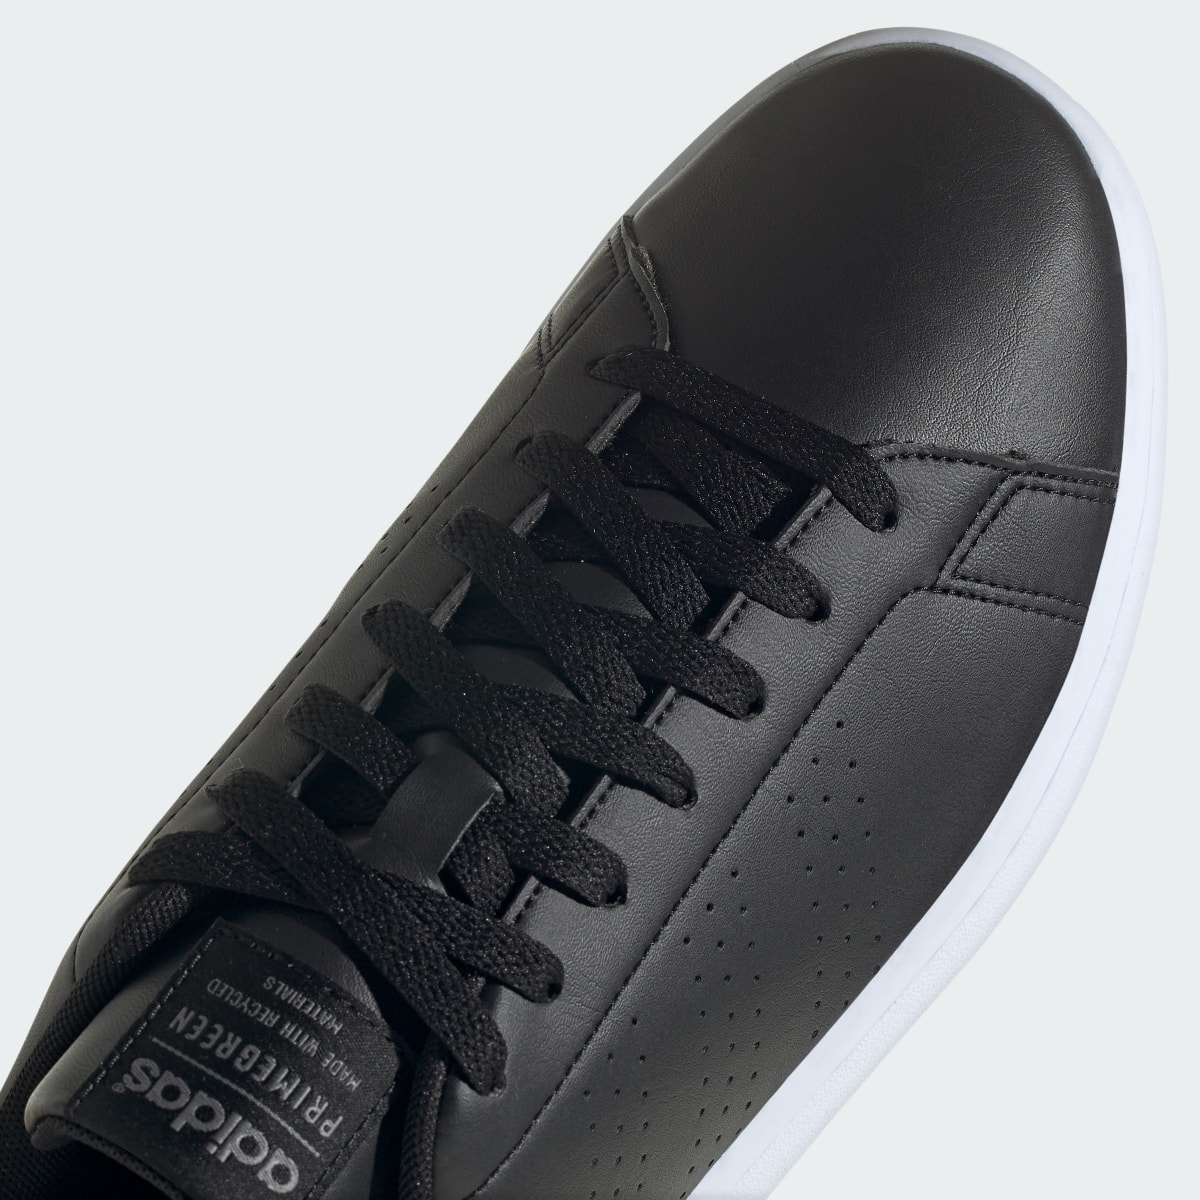 Adidas Advantage Ayakkabı. 9